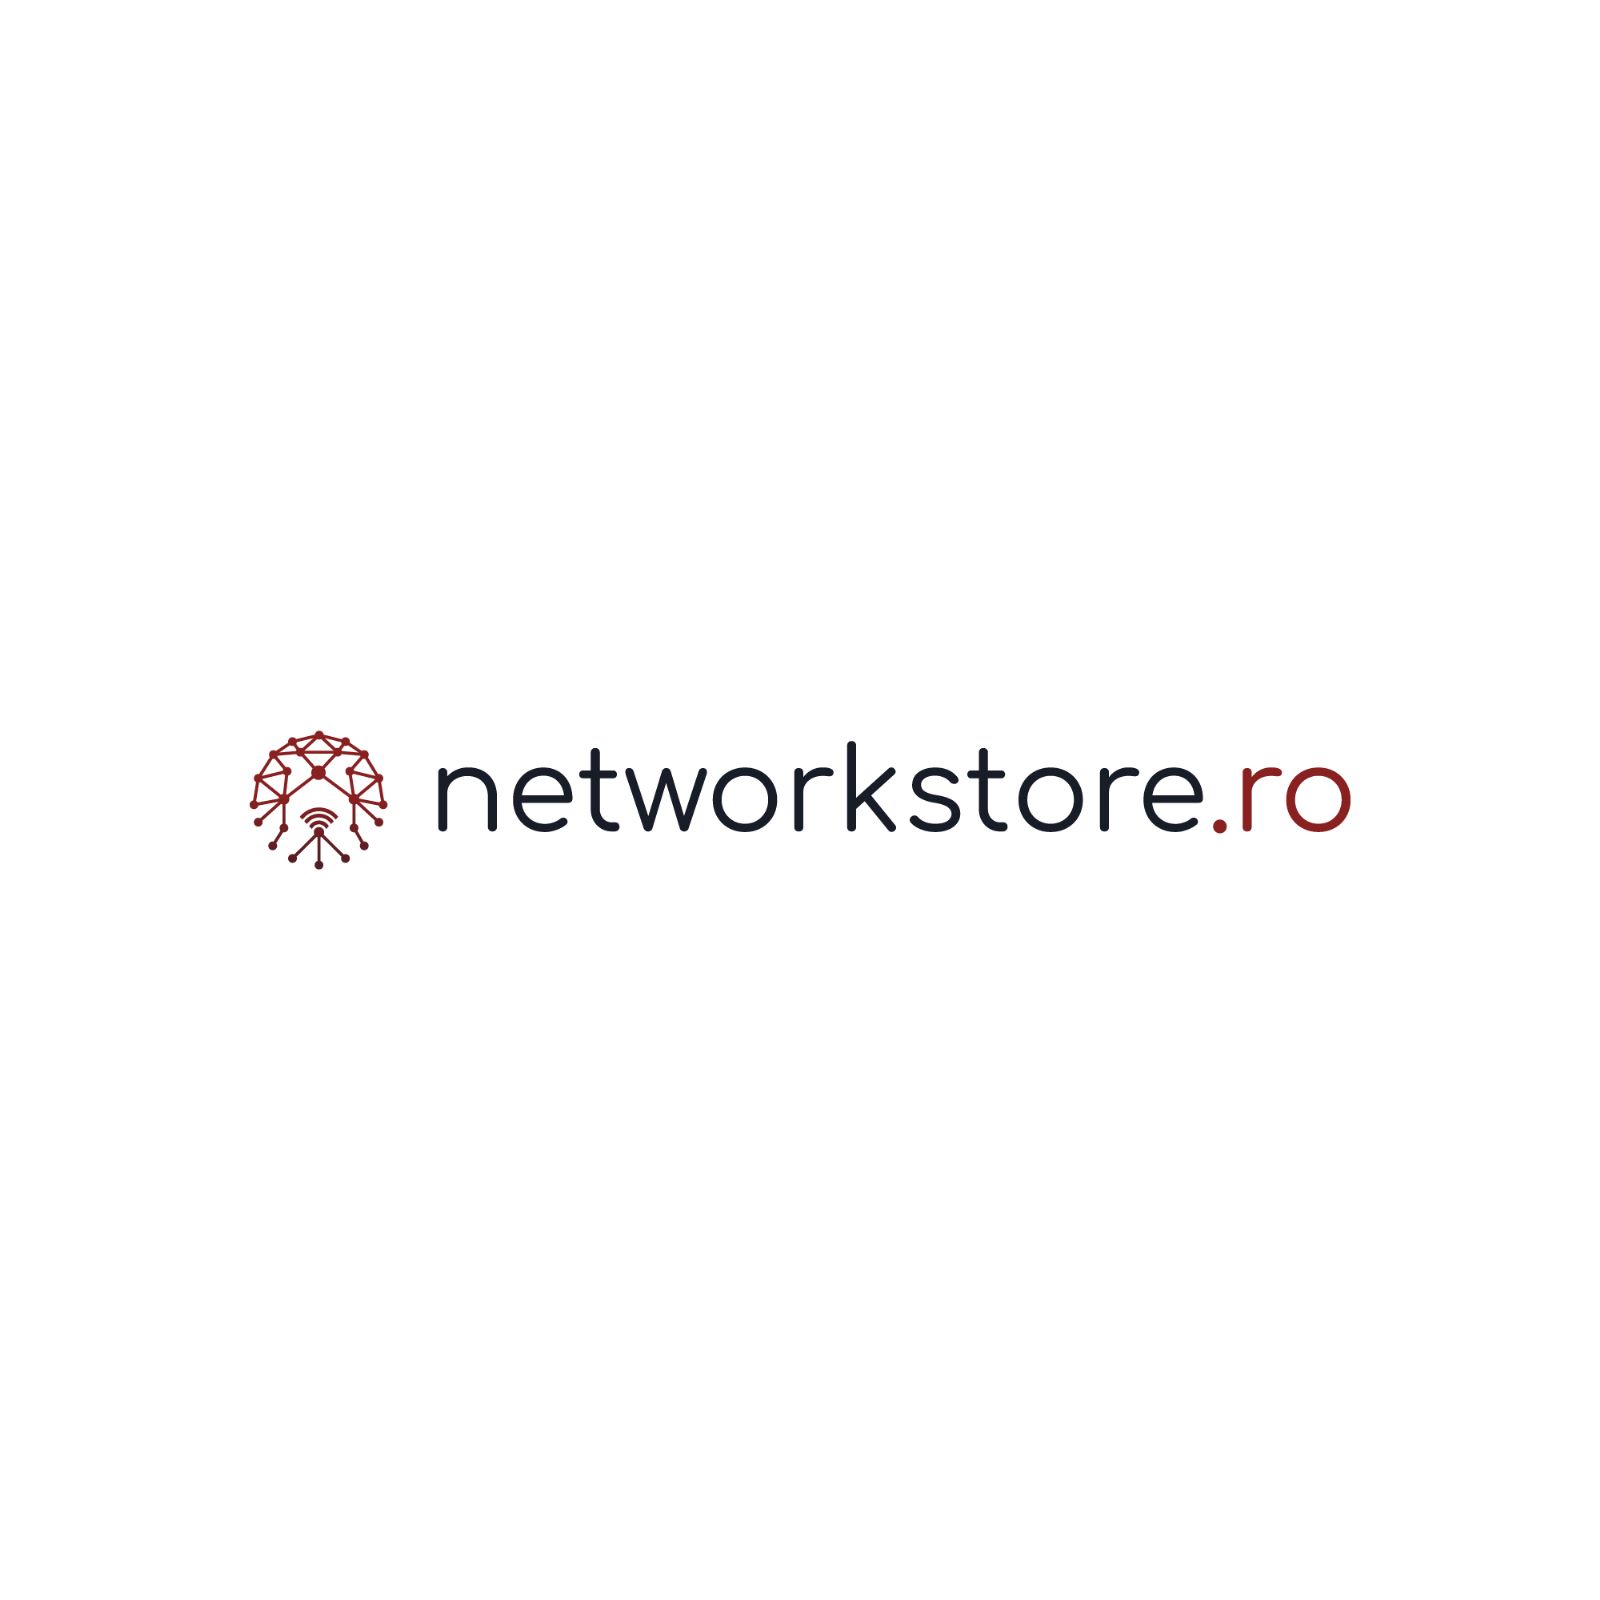 NetworkStore